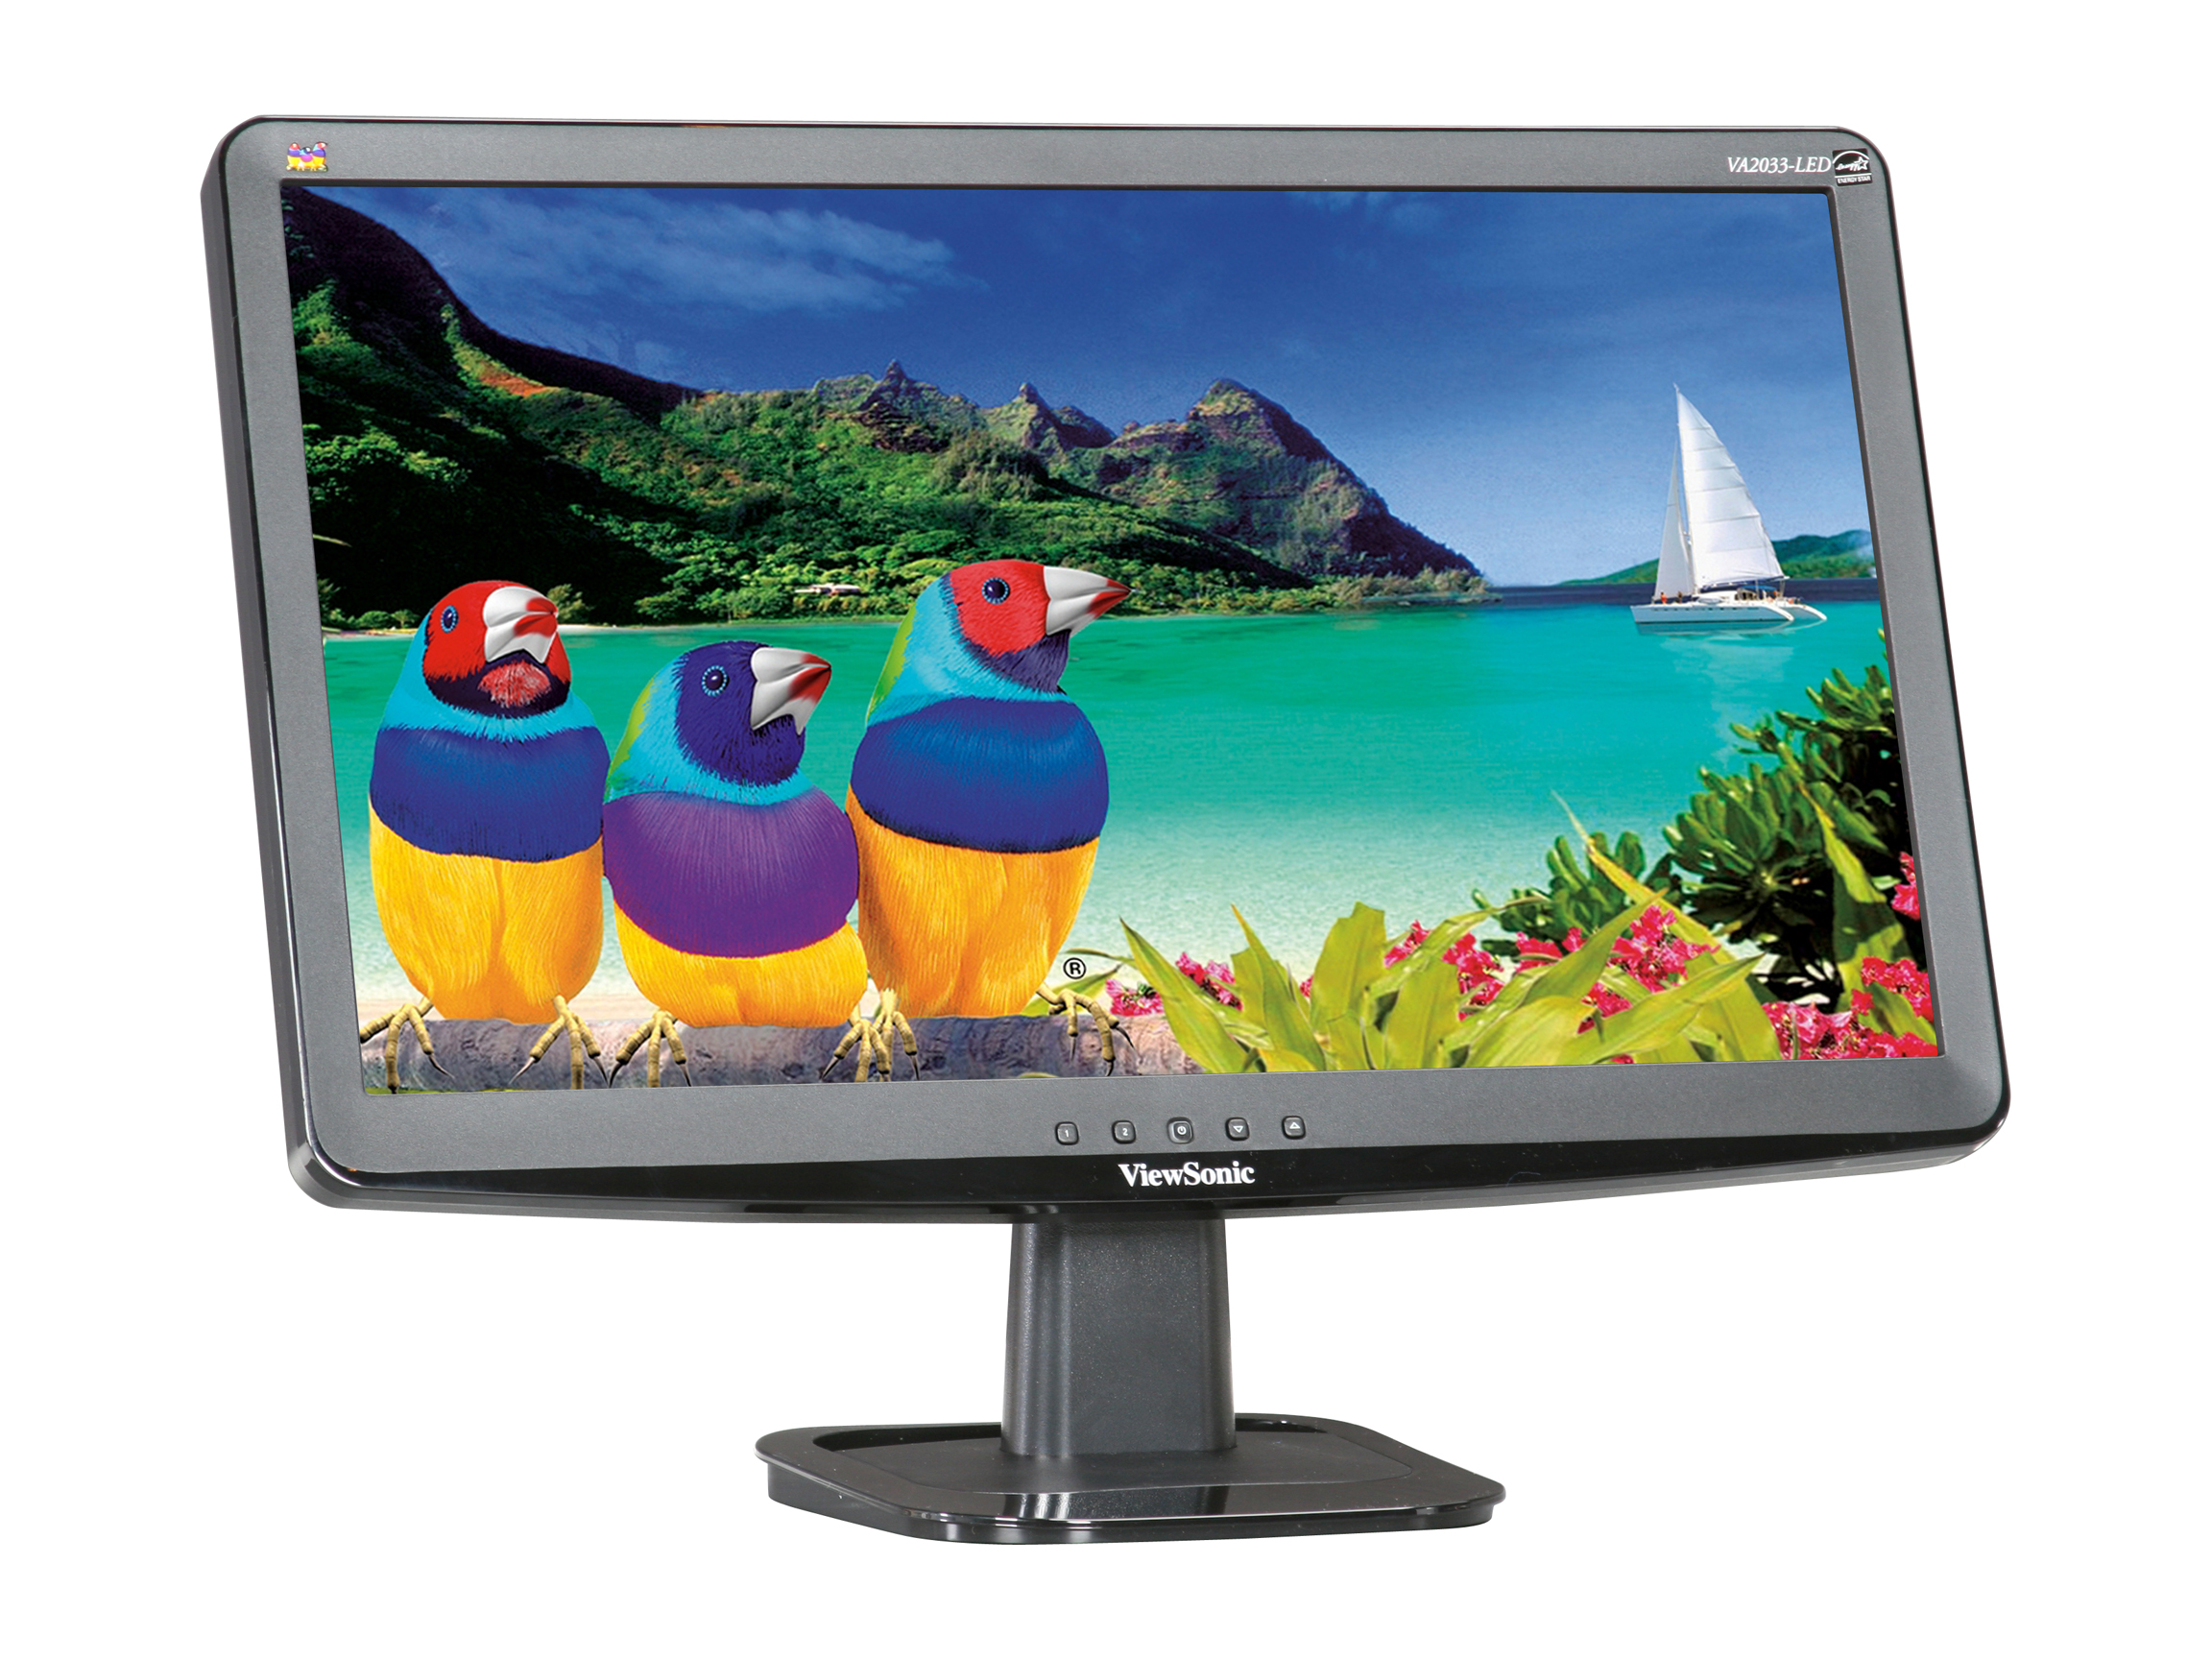 ViewSonic VA2033 LED Black 20" 5ms Widescreen LED Backlight LCD Monitor 250 cd/m2 DC 10,000,000:1 (1,000:1)